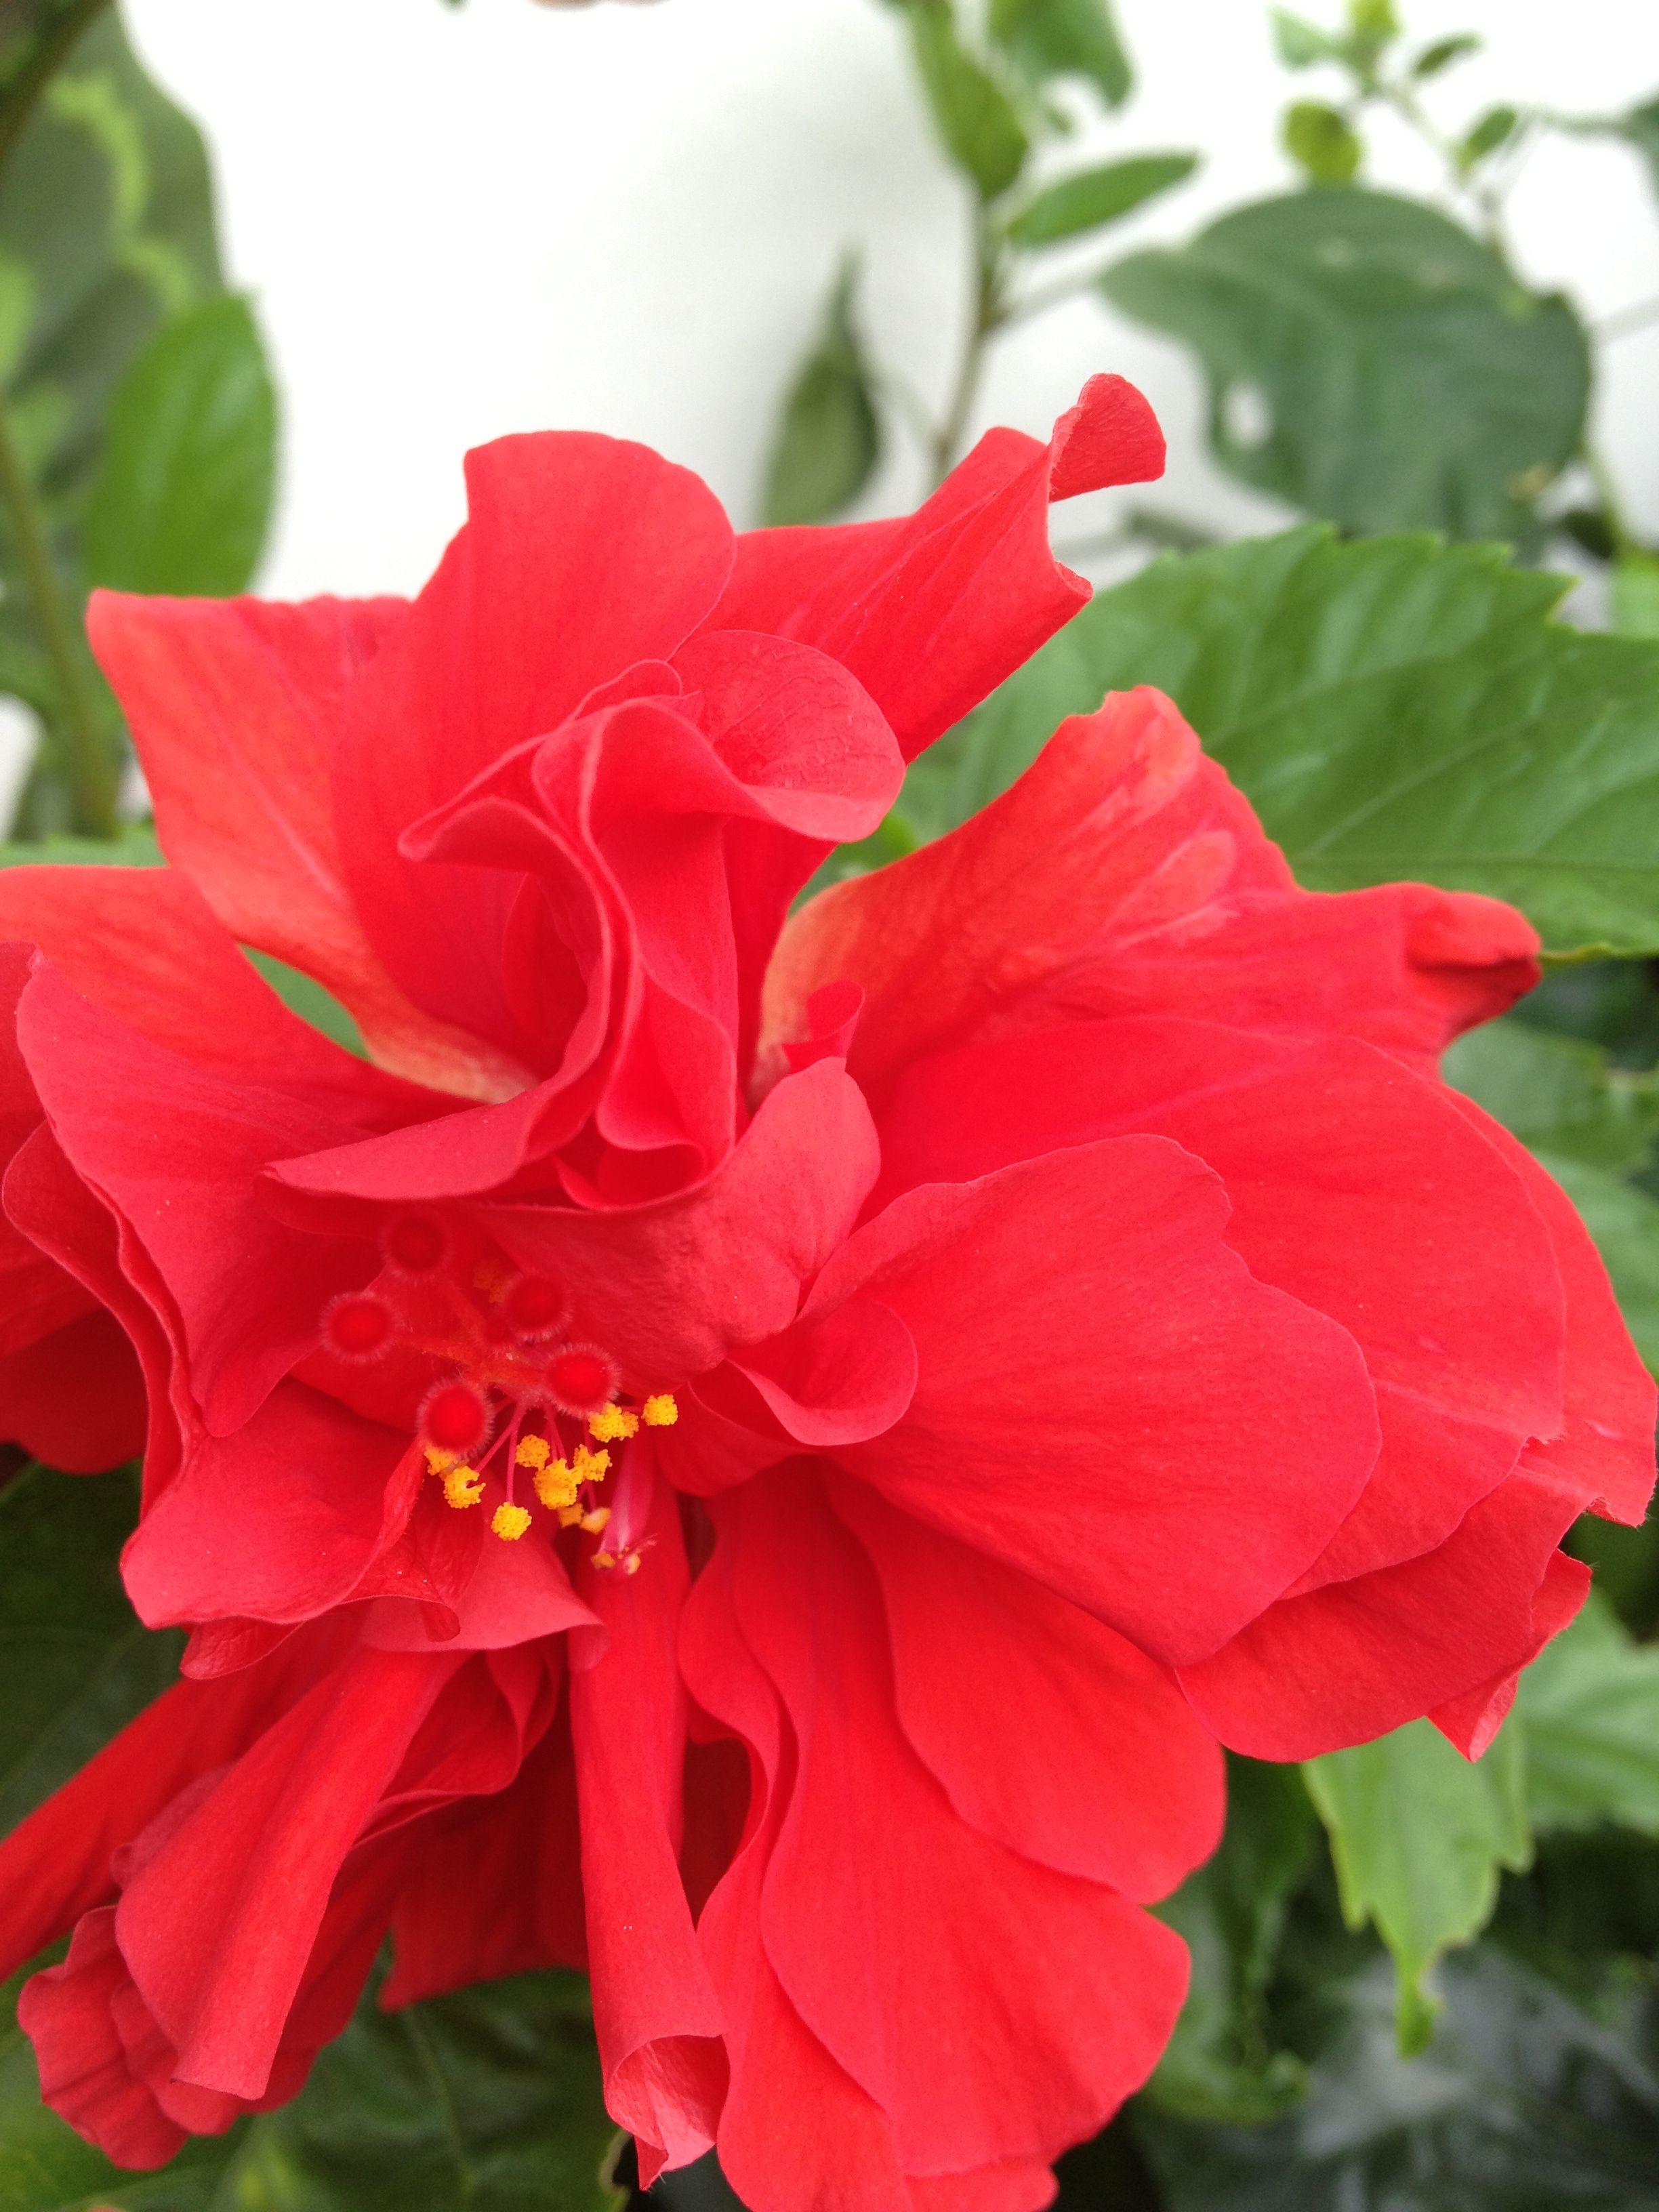 Multi petal red hibiscus | Hibiscus and garden flowers | Pinterest ...